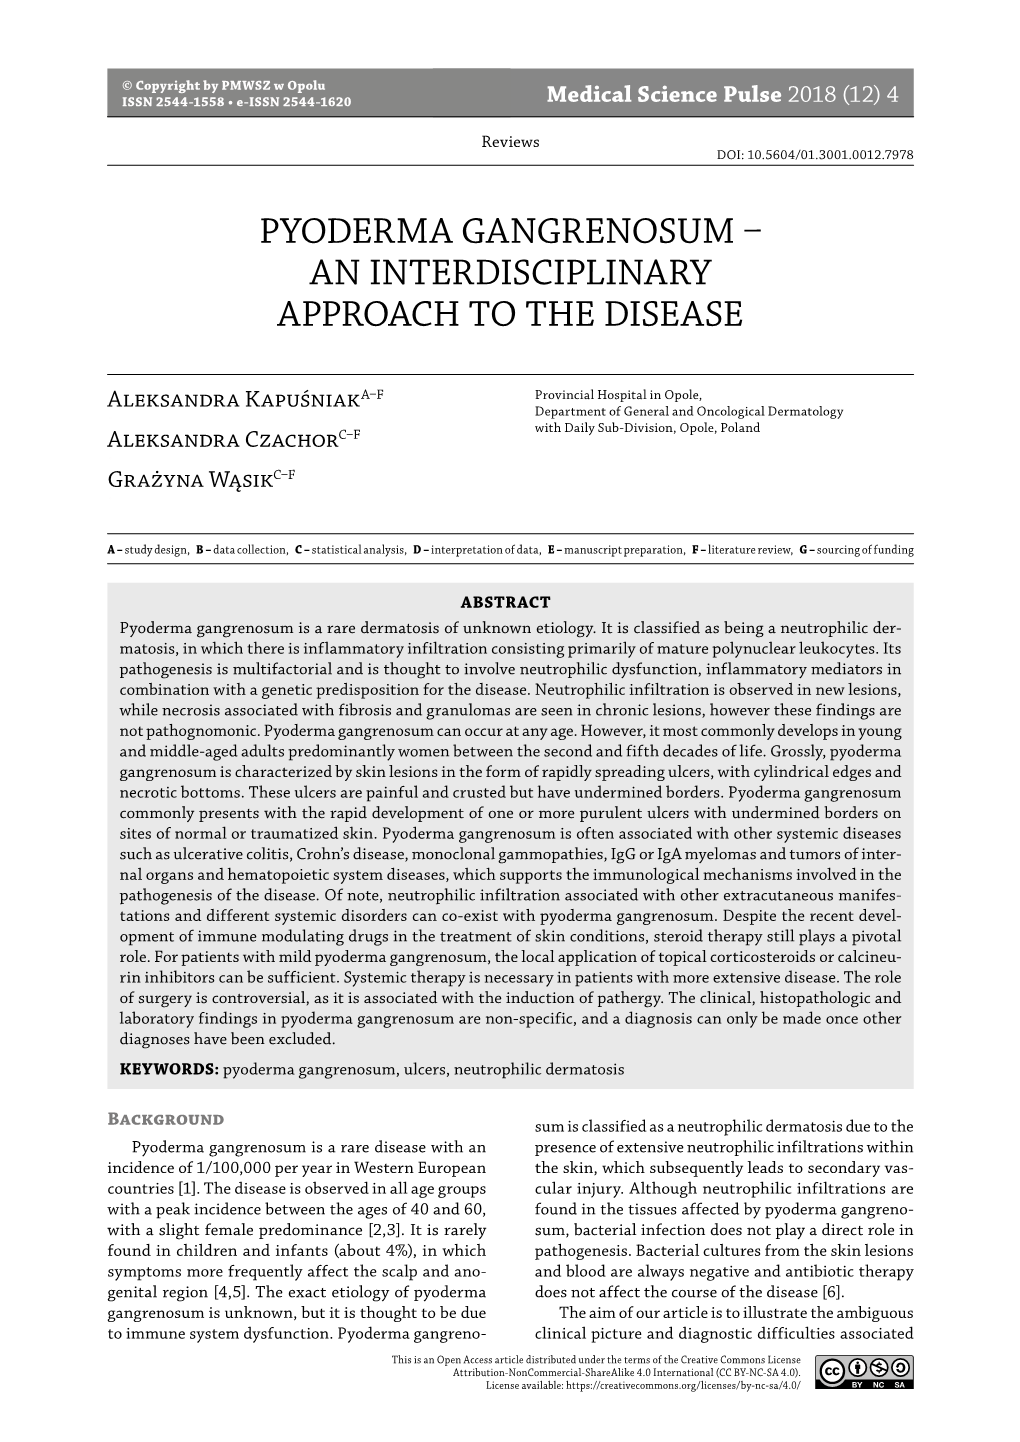 Pyoderma Gangrenosum – an Interdisciplinary Approach to the Disease